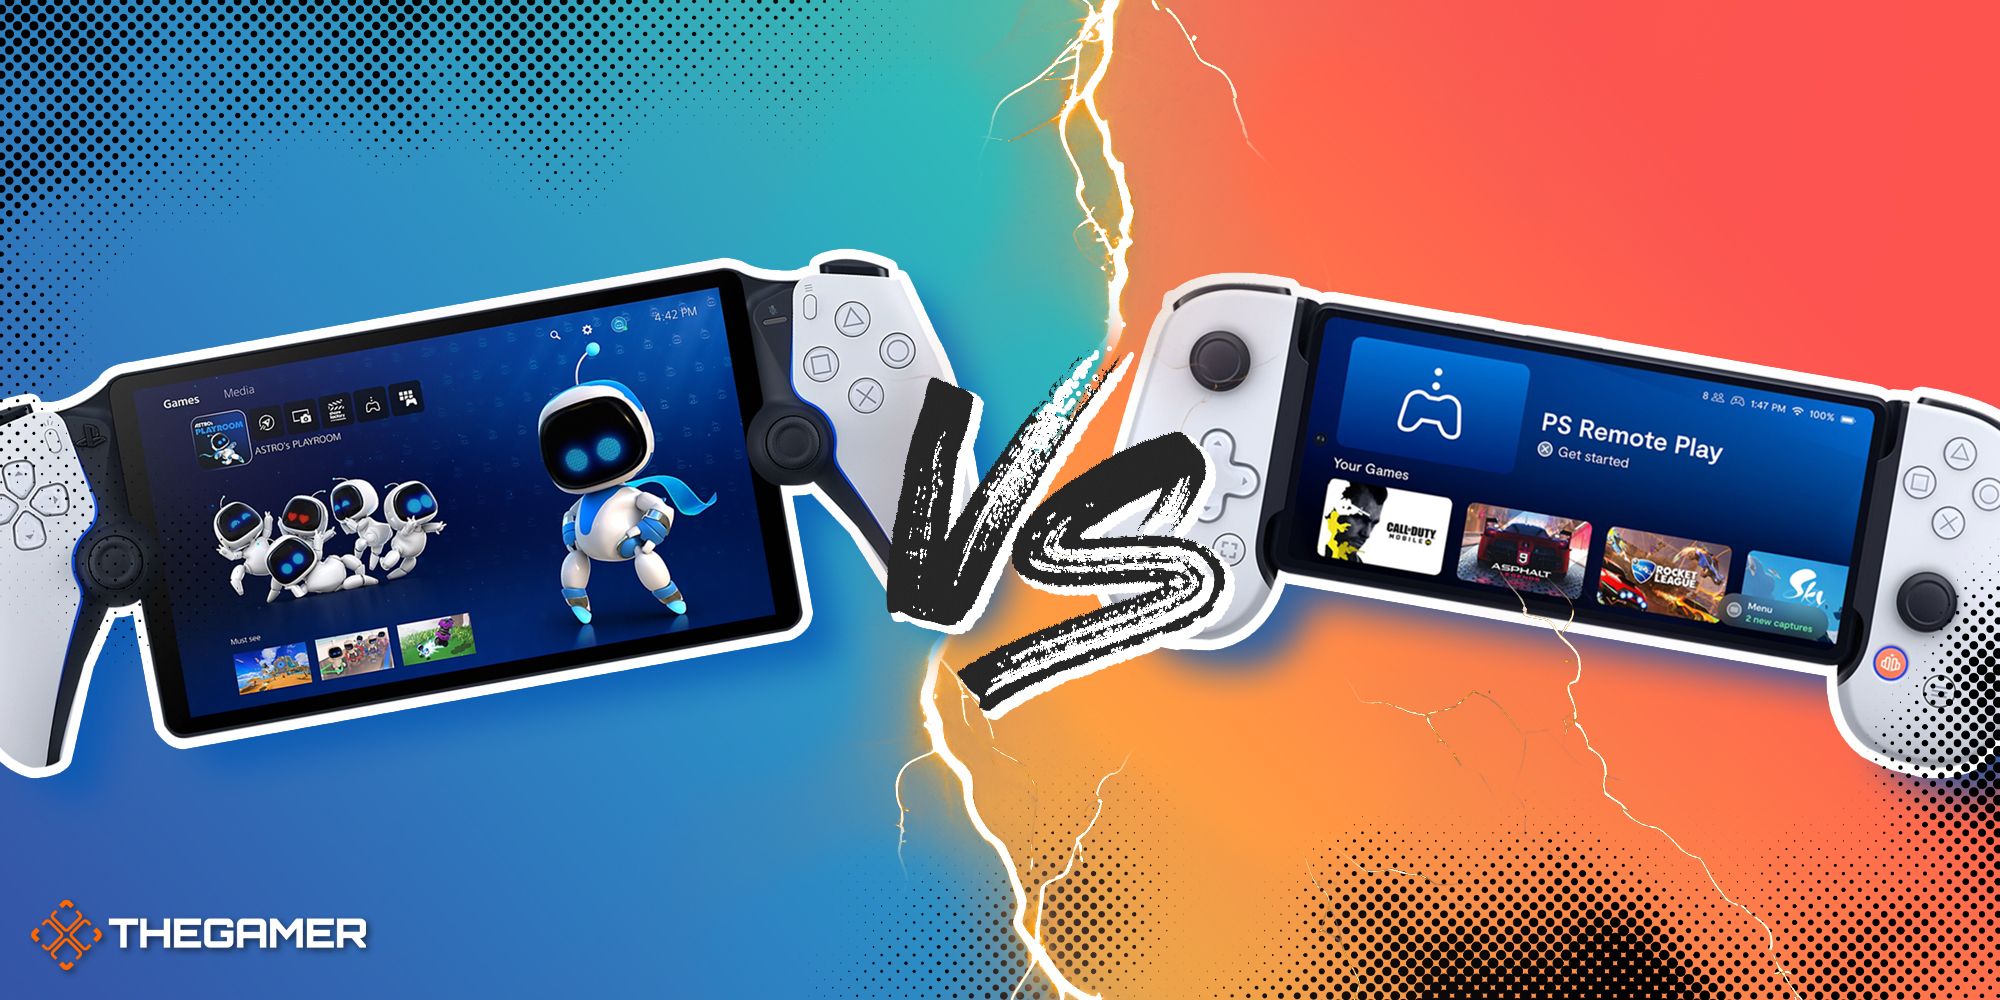 PlayStation Portal vs Backbone One - which should you buy?